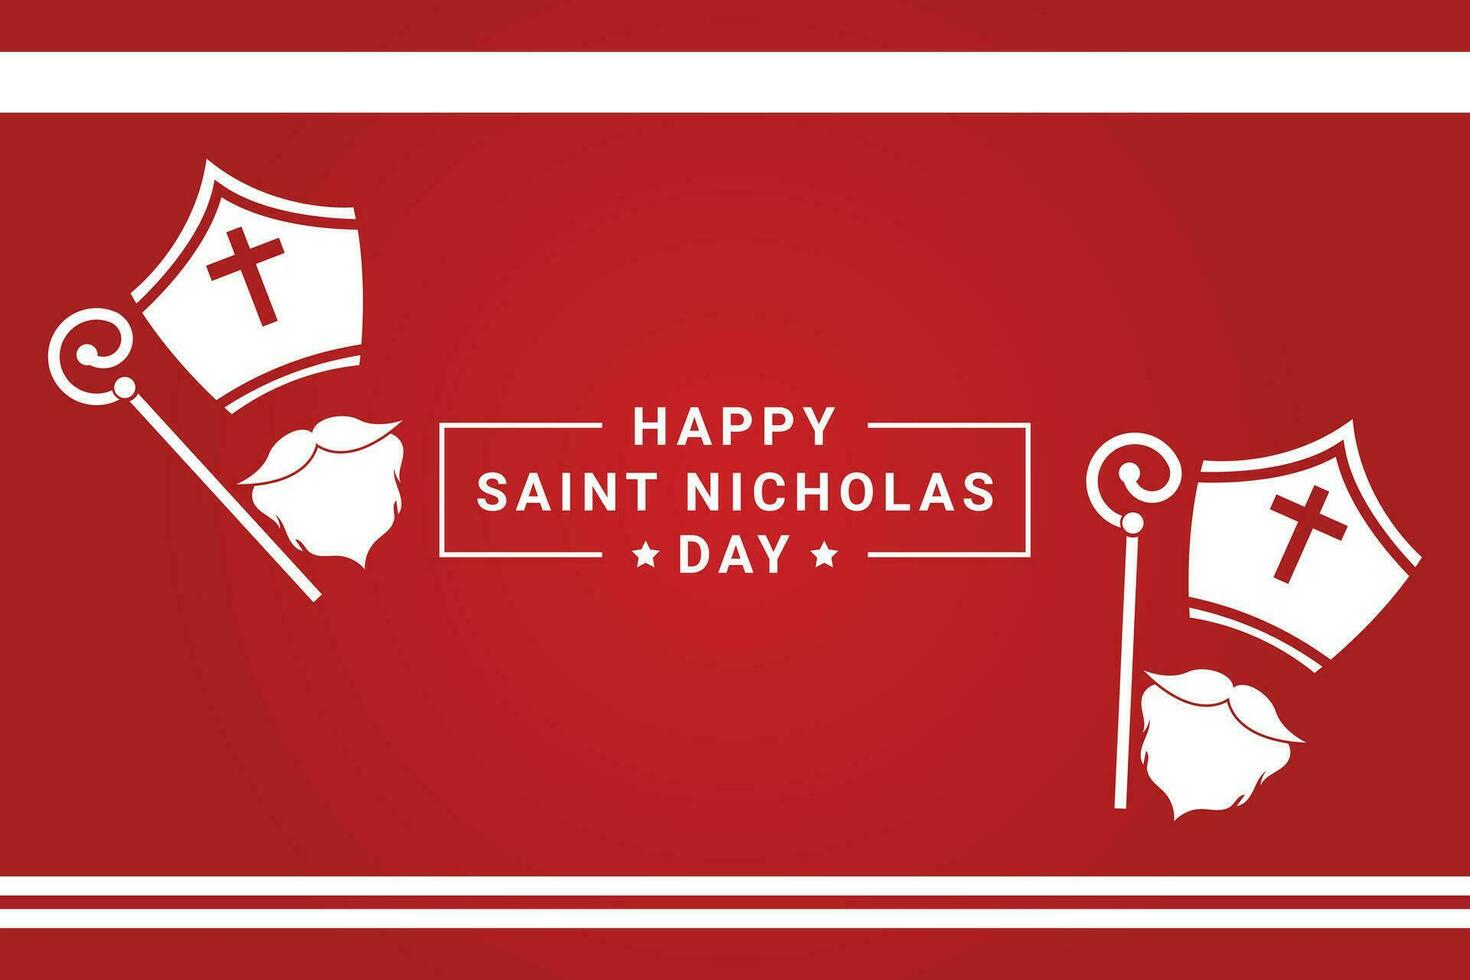 Happy saint nicholas day vector design background template